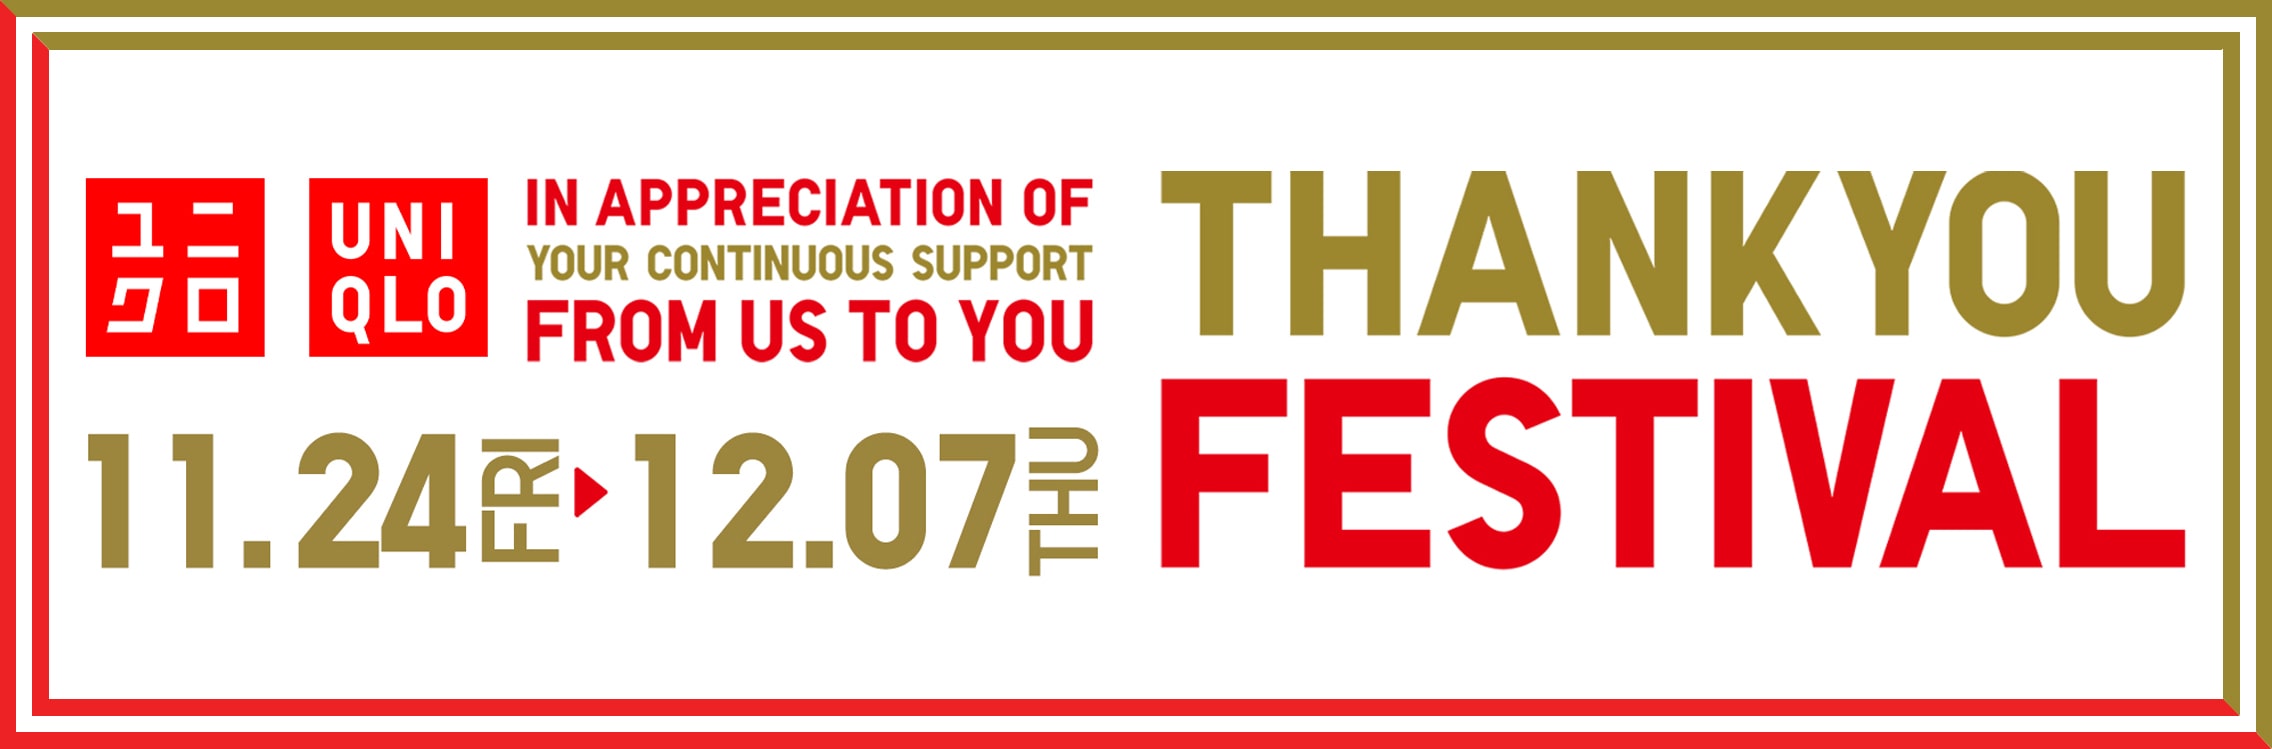 Thank you festival banner